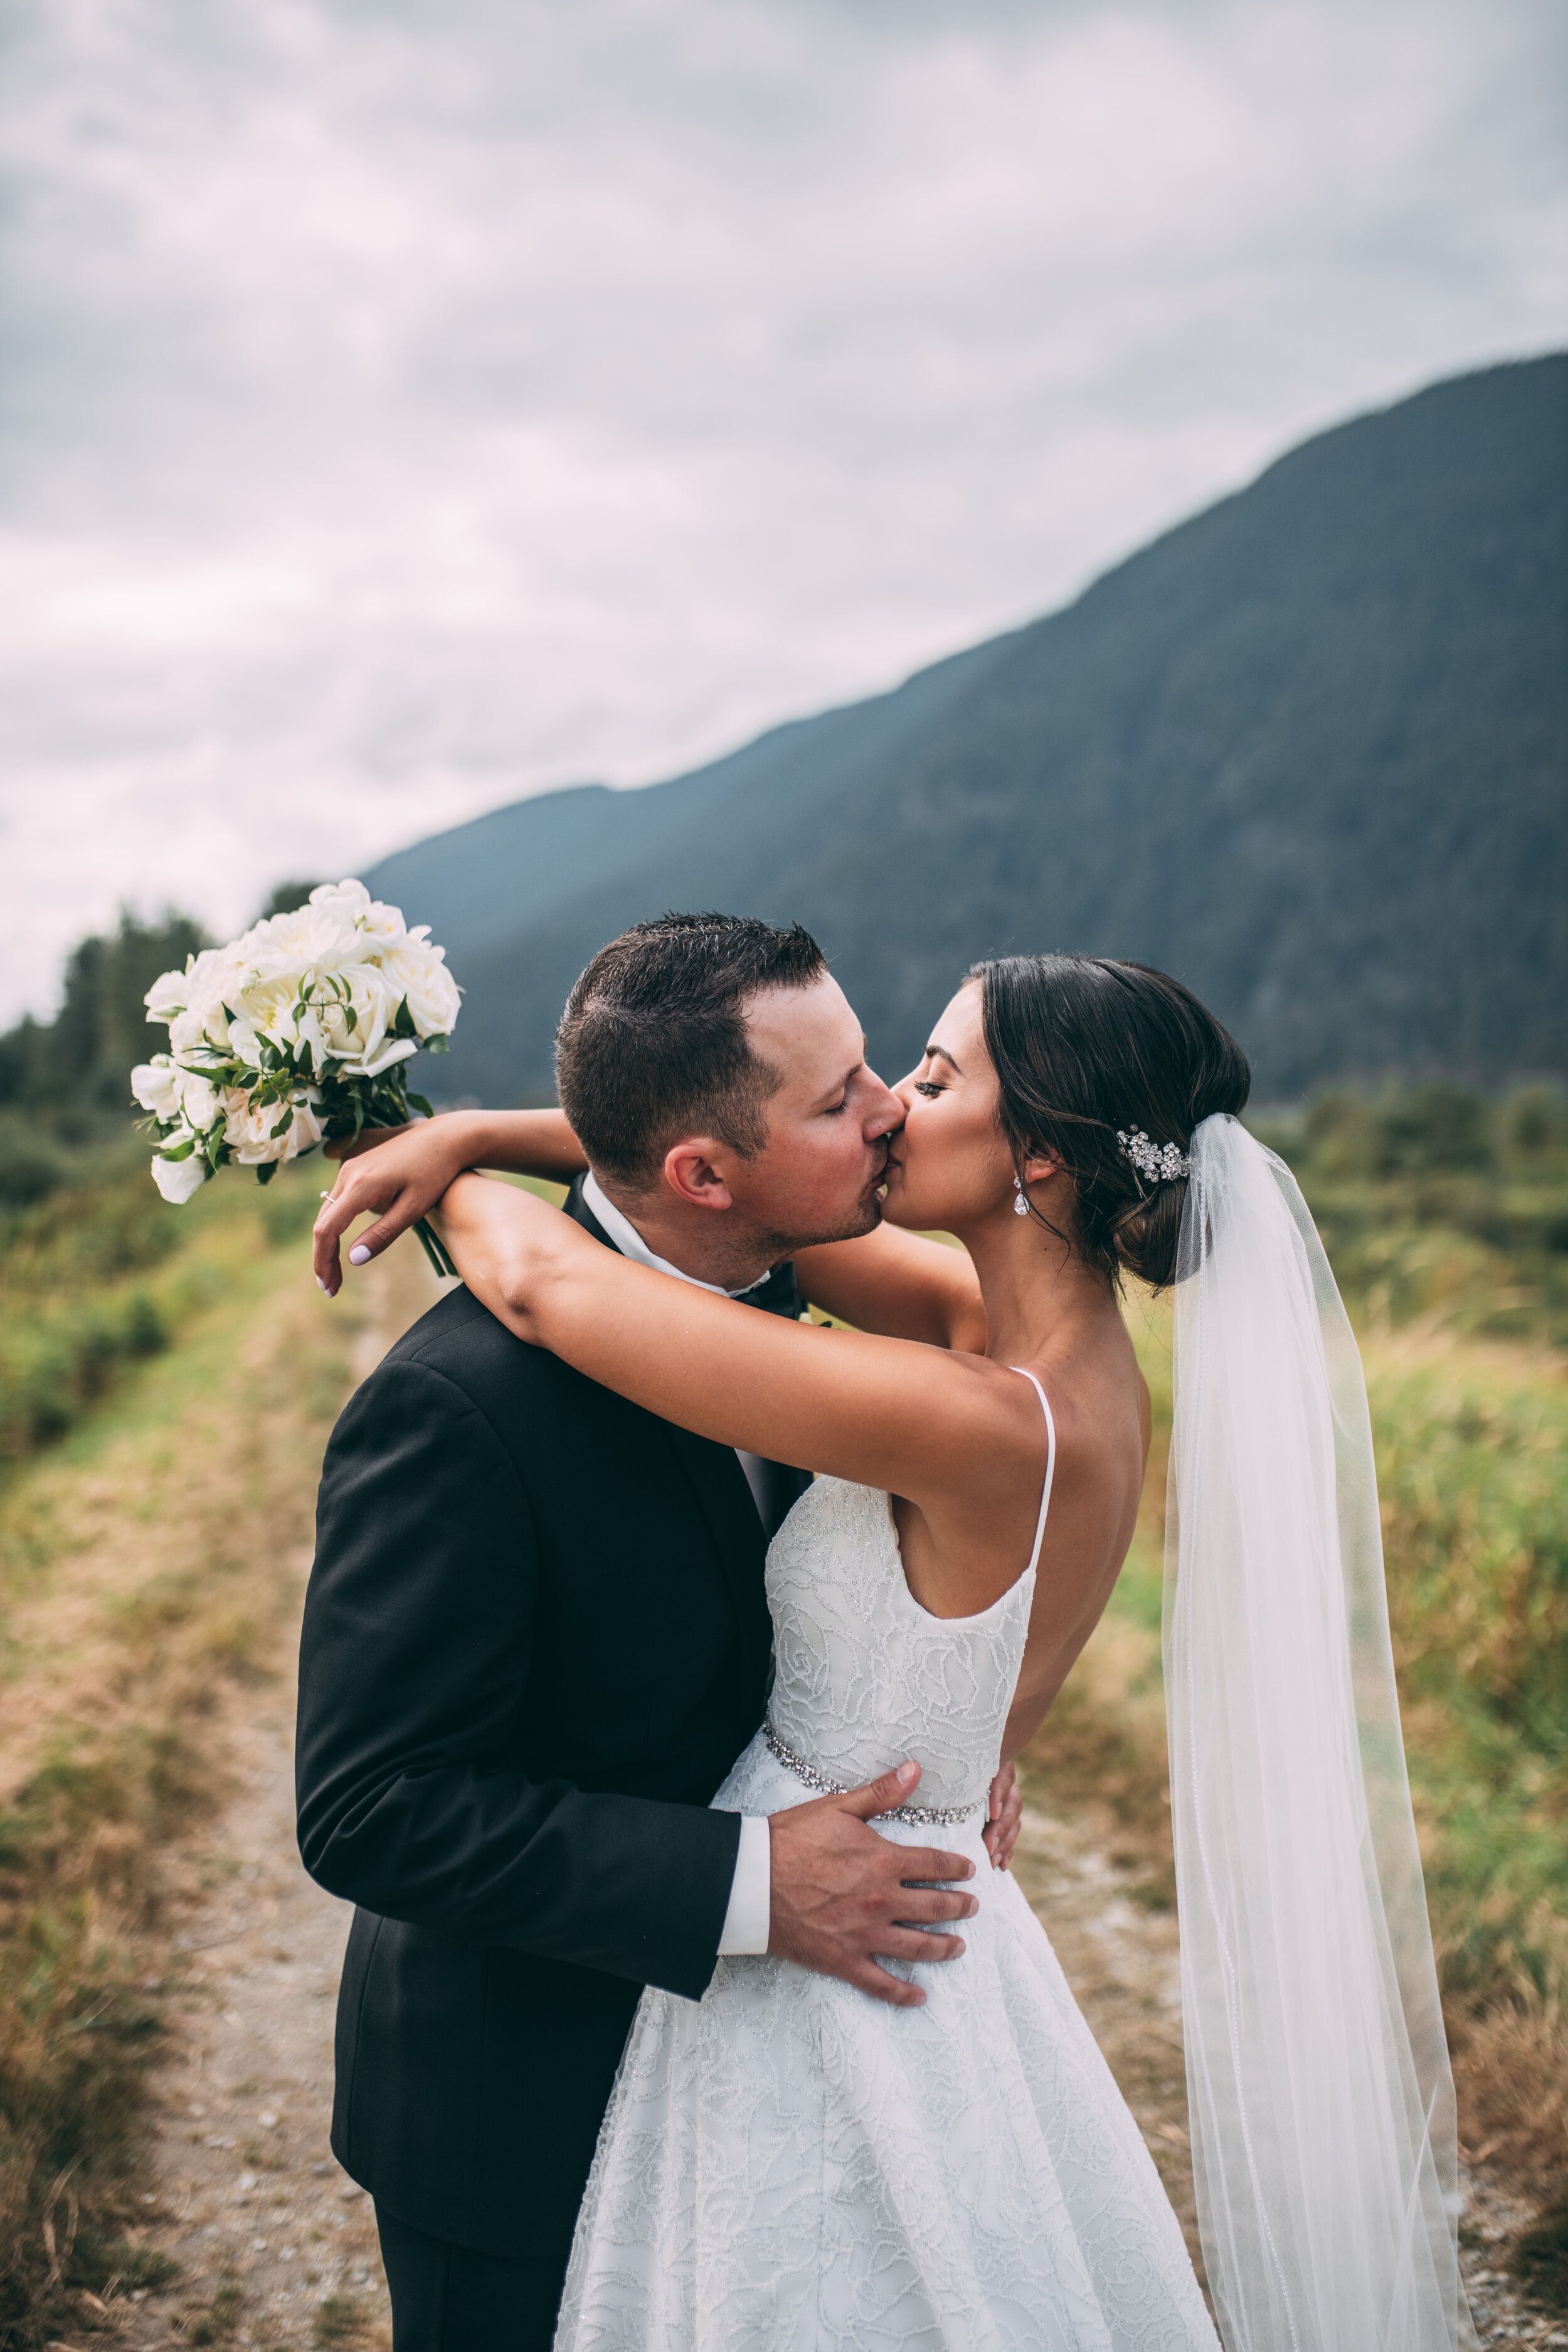 Natasha & Lee Sneak Peeks - August 31, 2019 Swaneset Wedding-1334.jpg